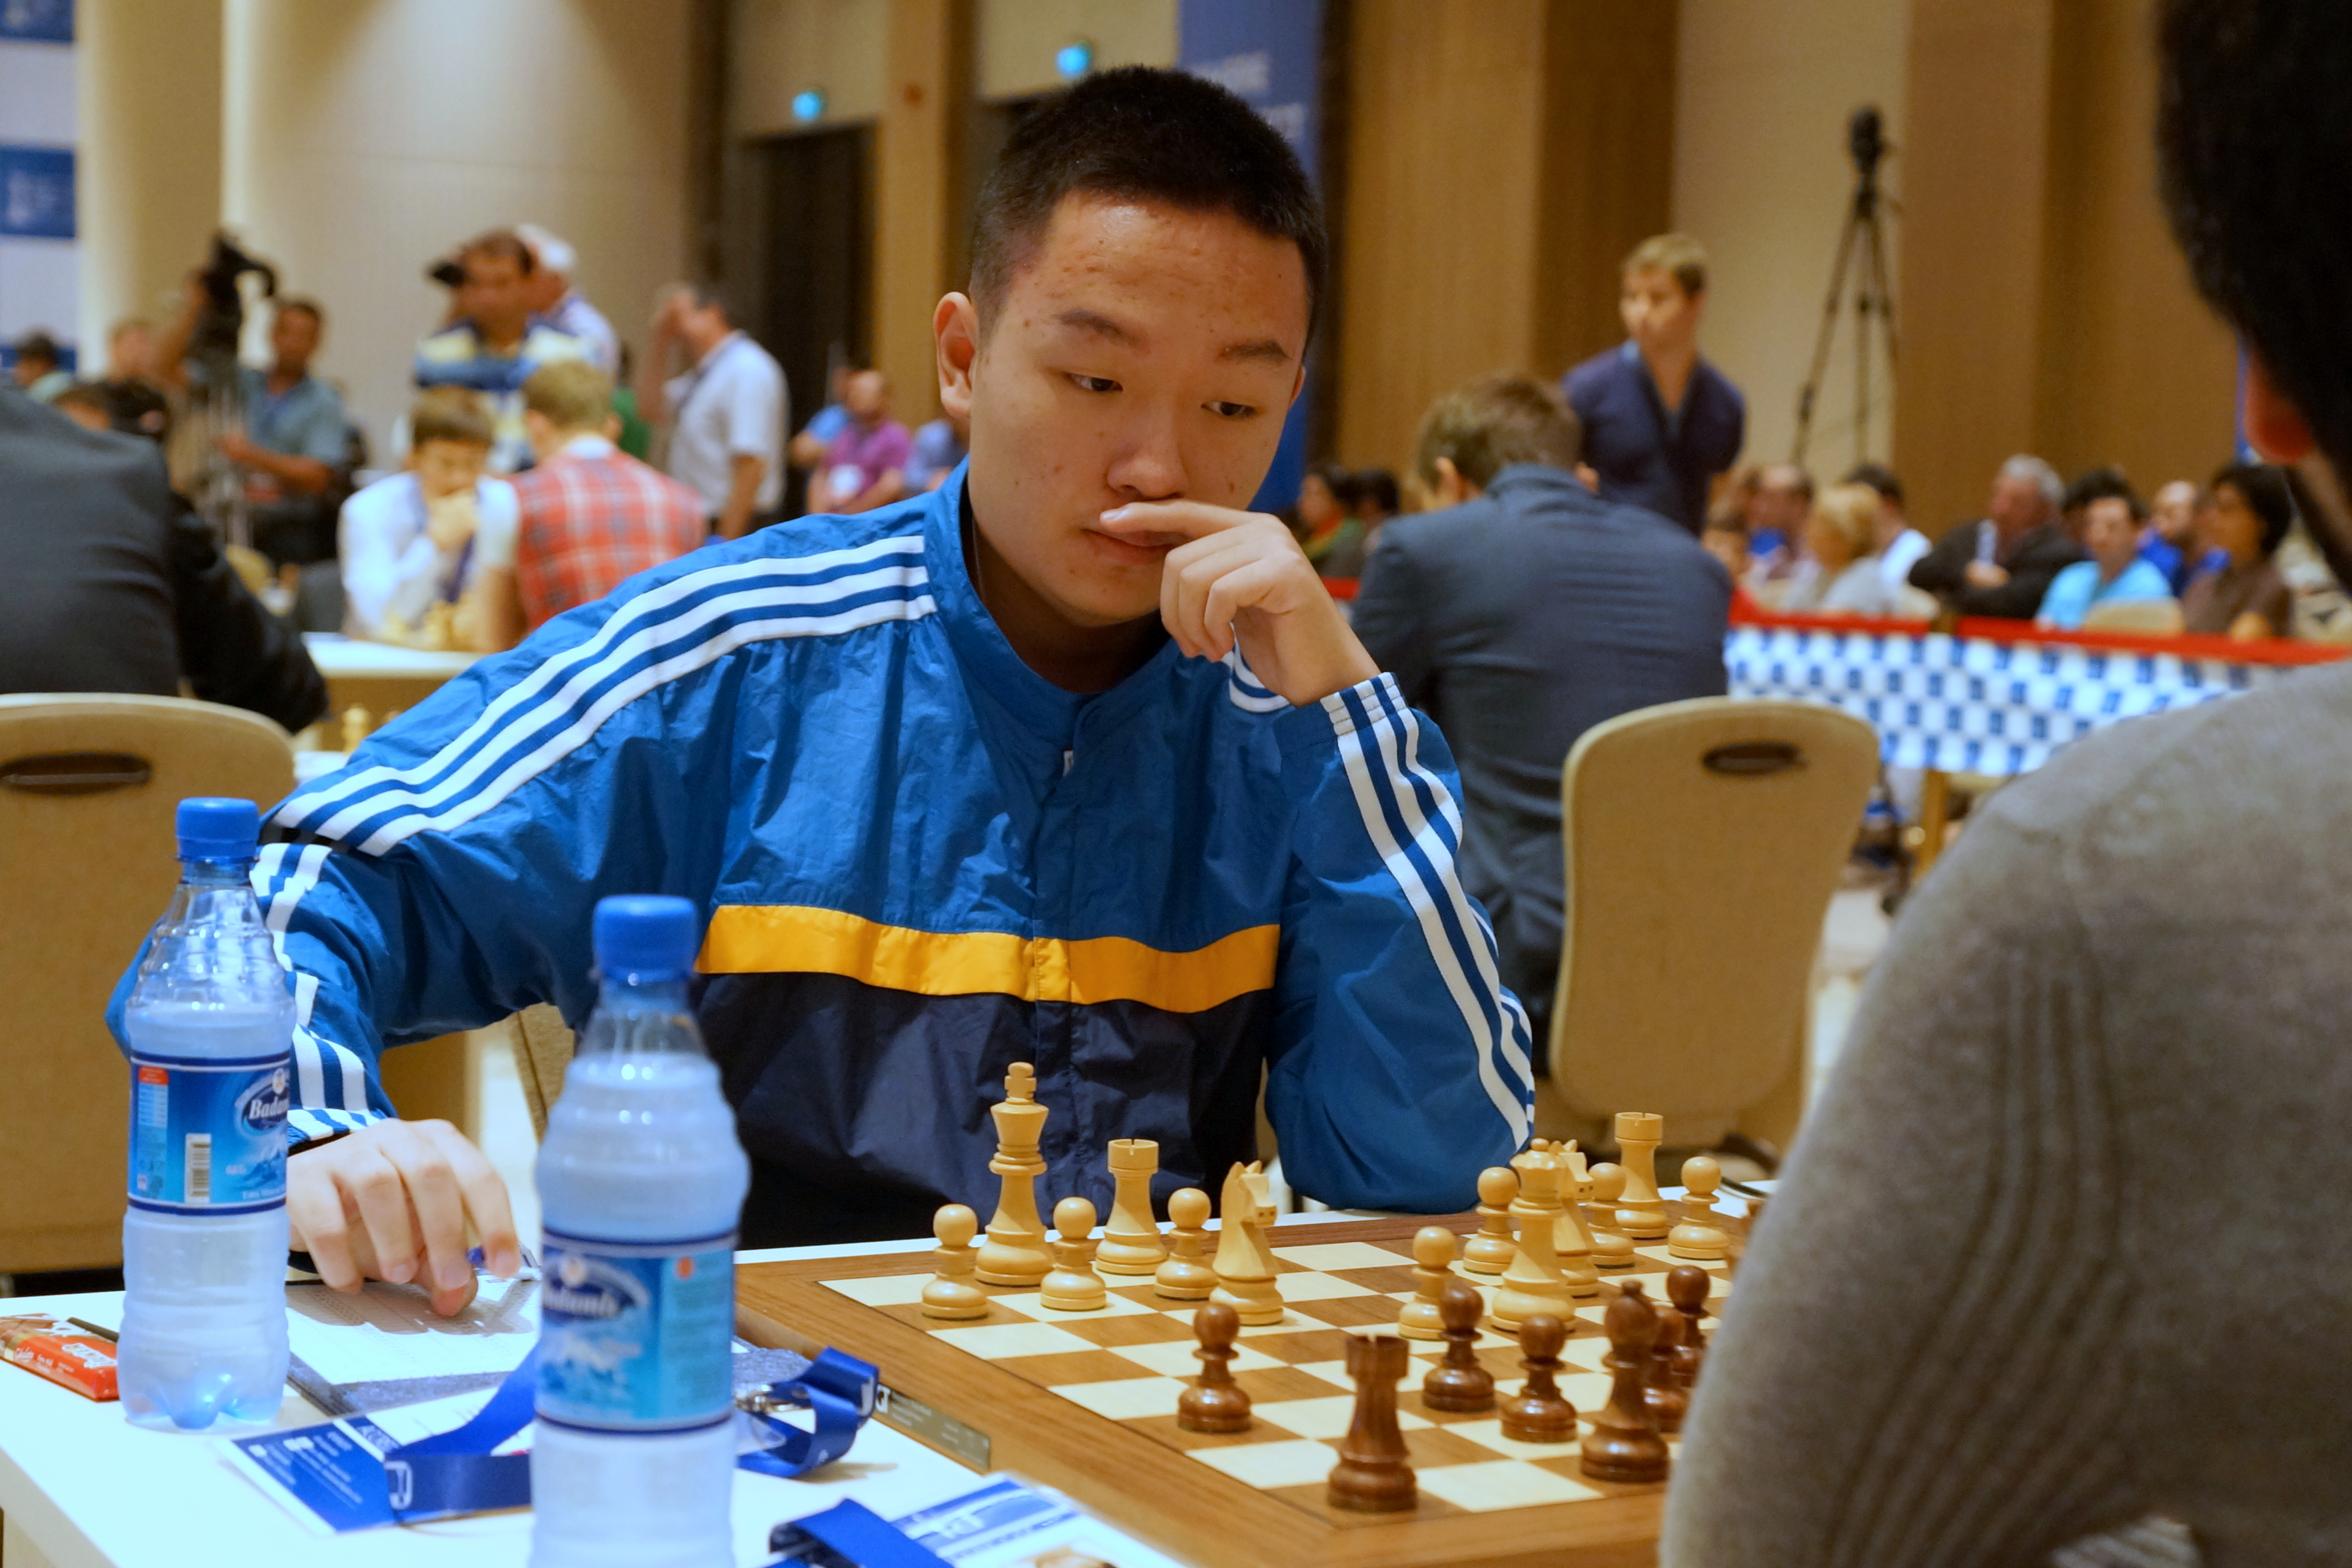 CHESS NEWS BLOG: : Chess Trivia Photo: Name this former  Women's World Chess Champion from China